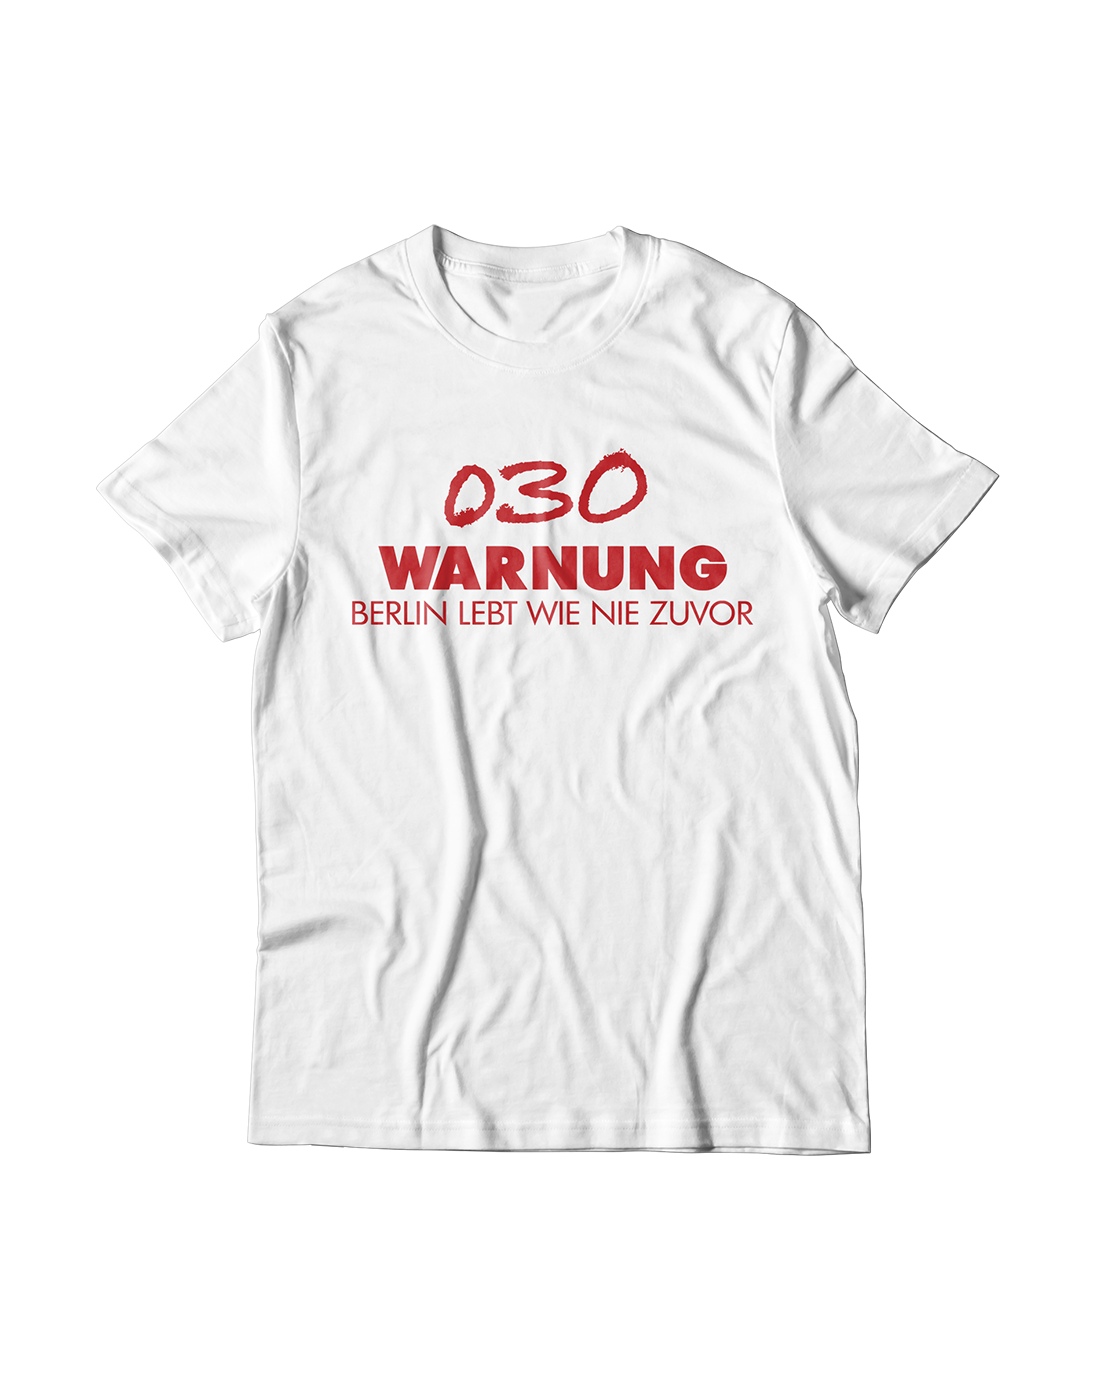 Capital Bra Shirt 030 Warnung White